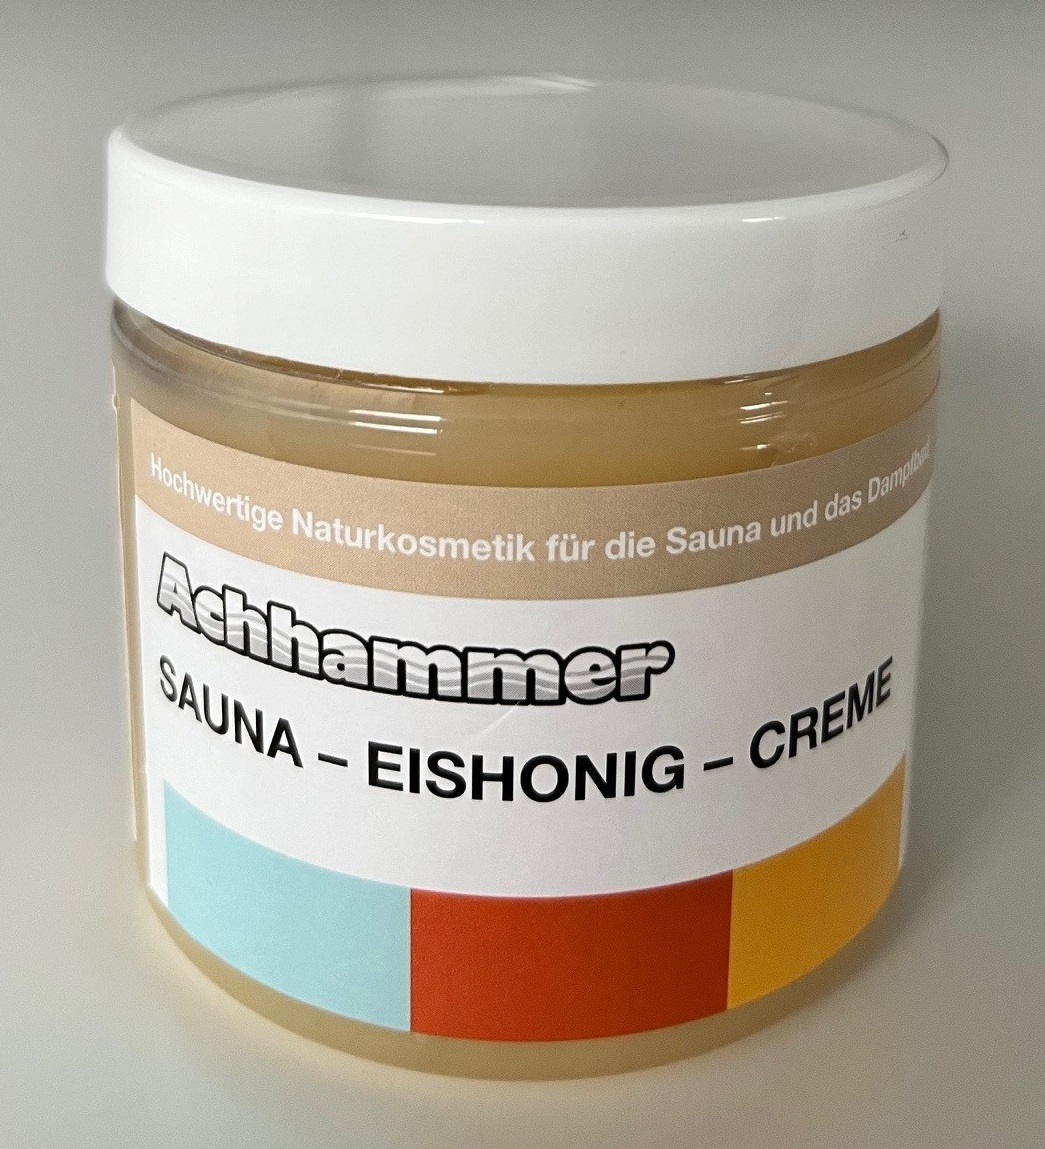 Sauna-Eishonig-Creme